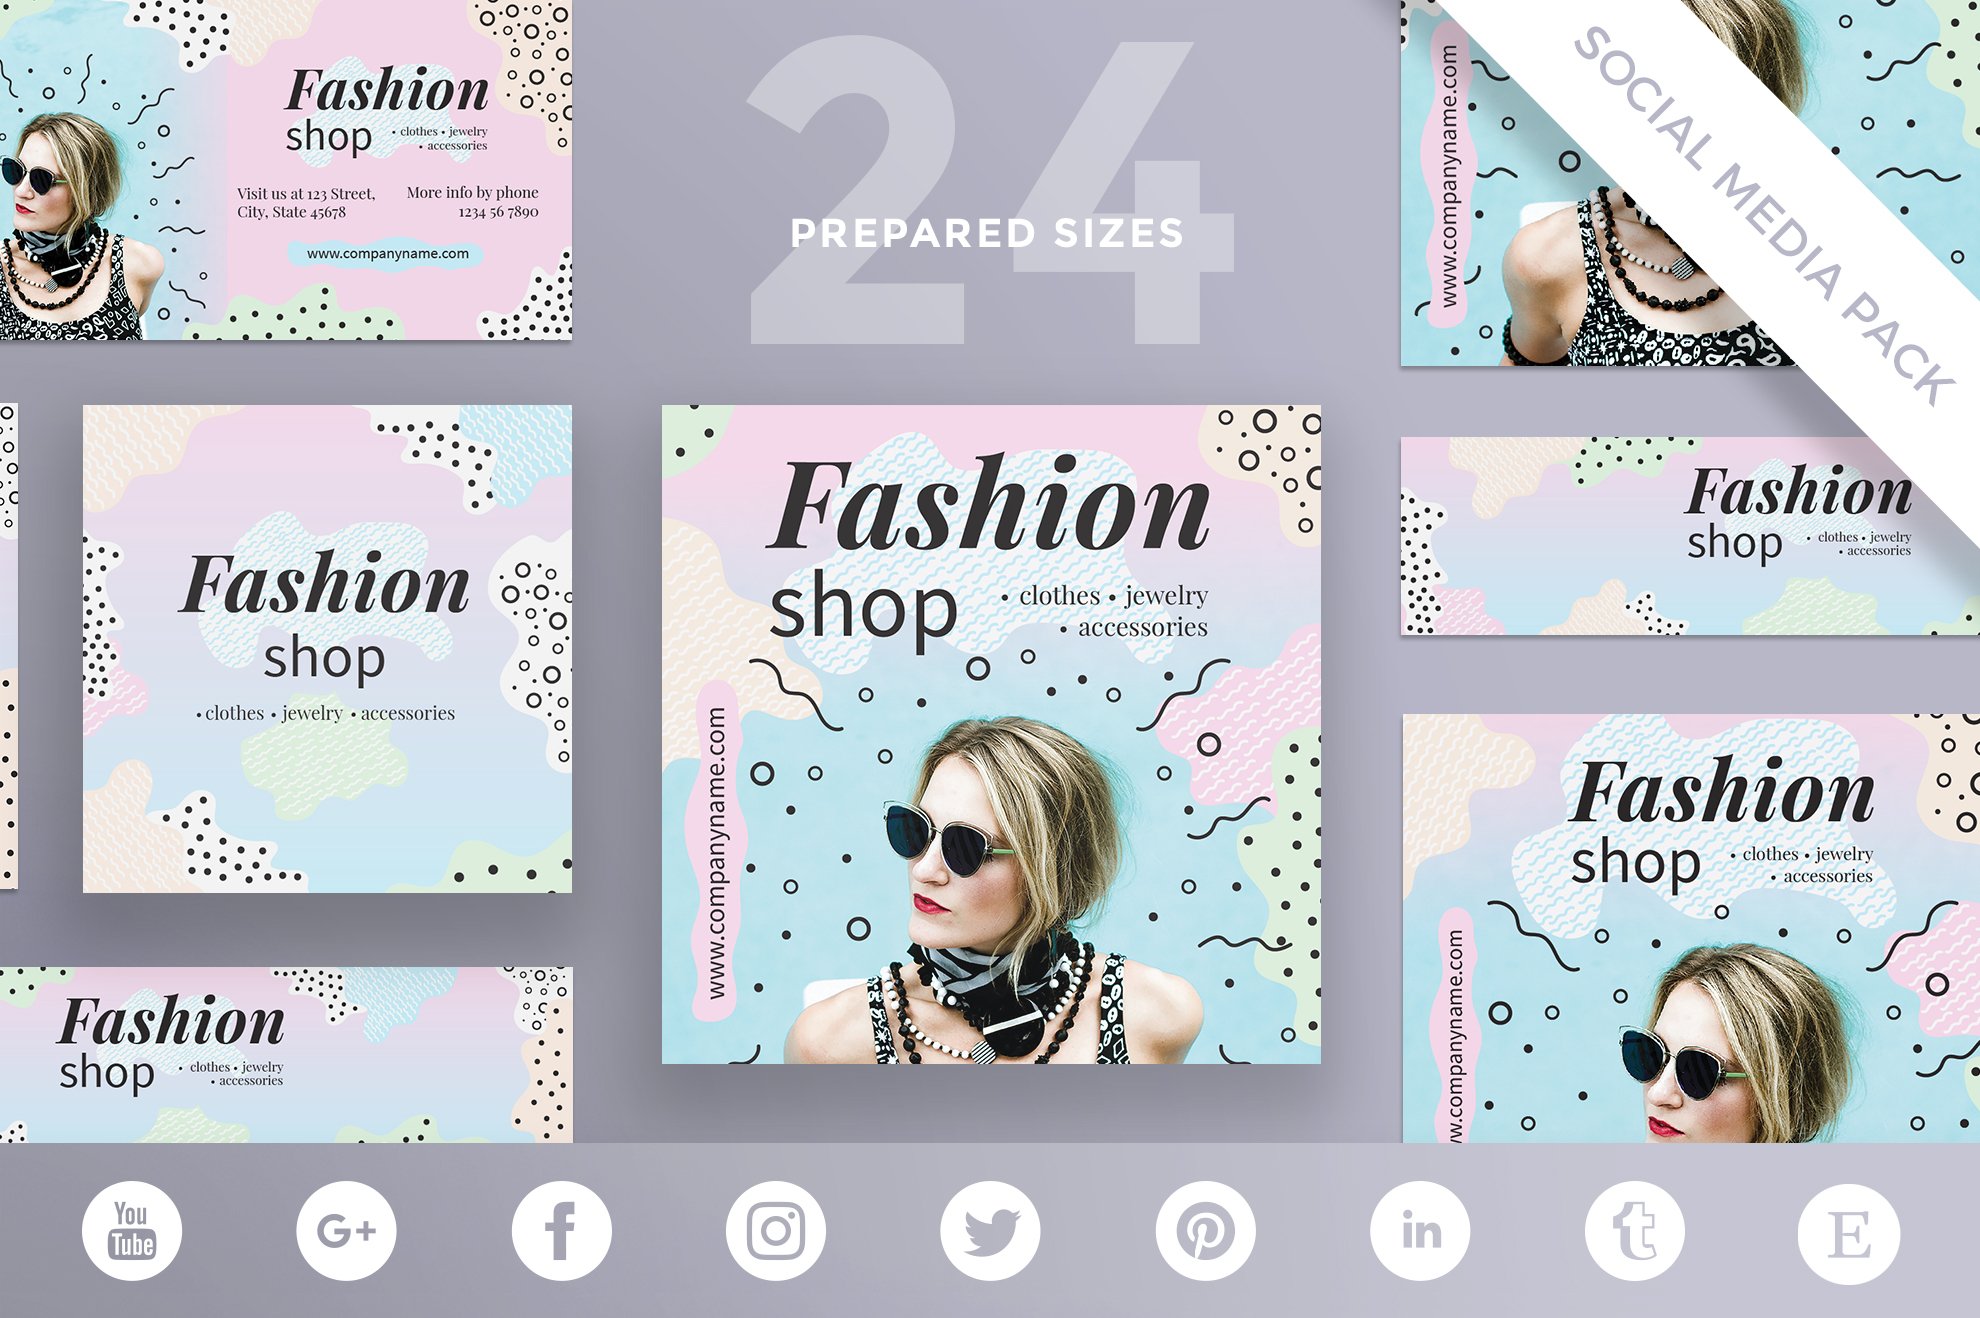 Social Media Pack | Fashion Shop cover image.